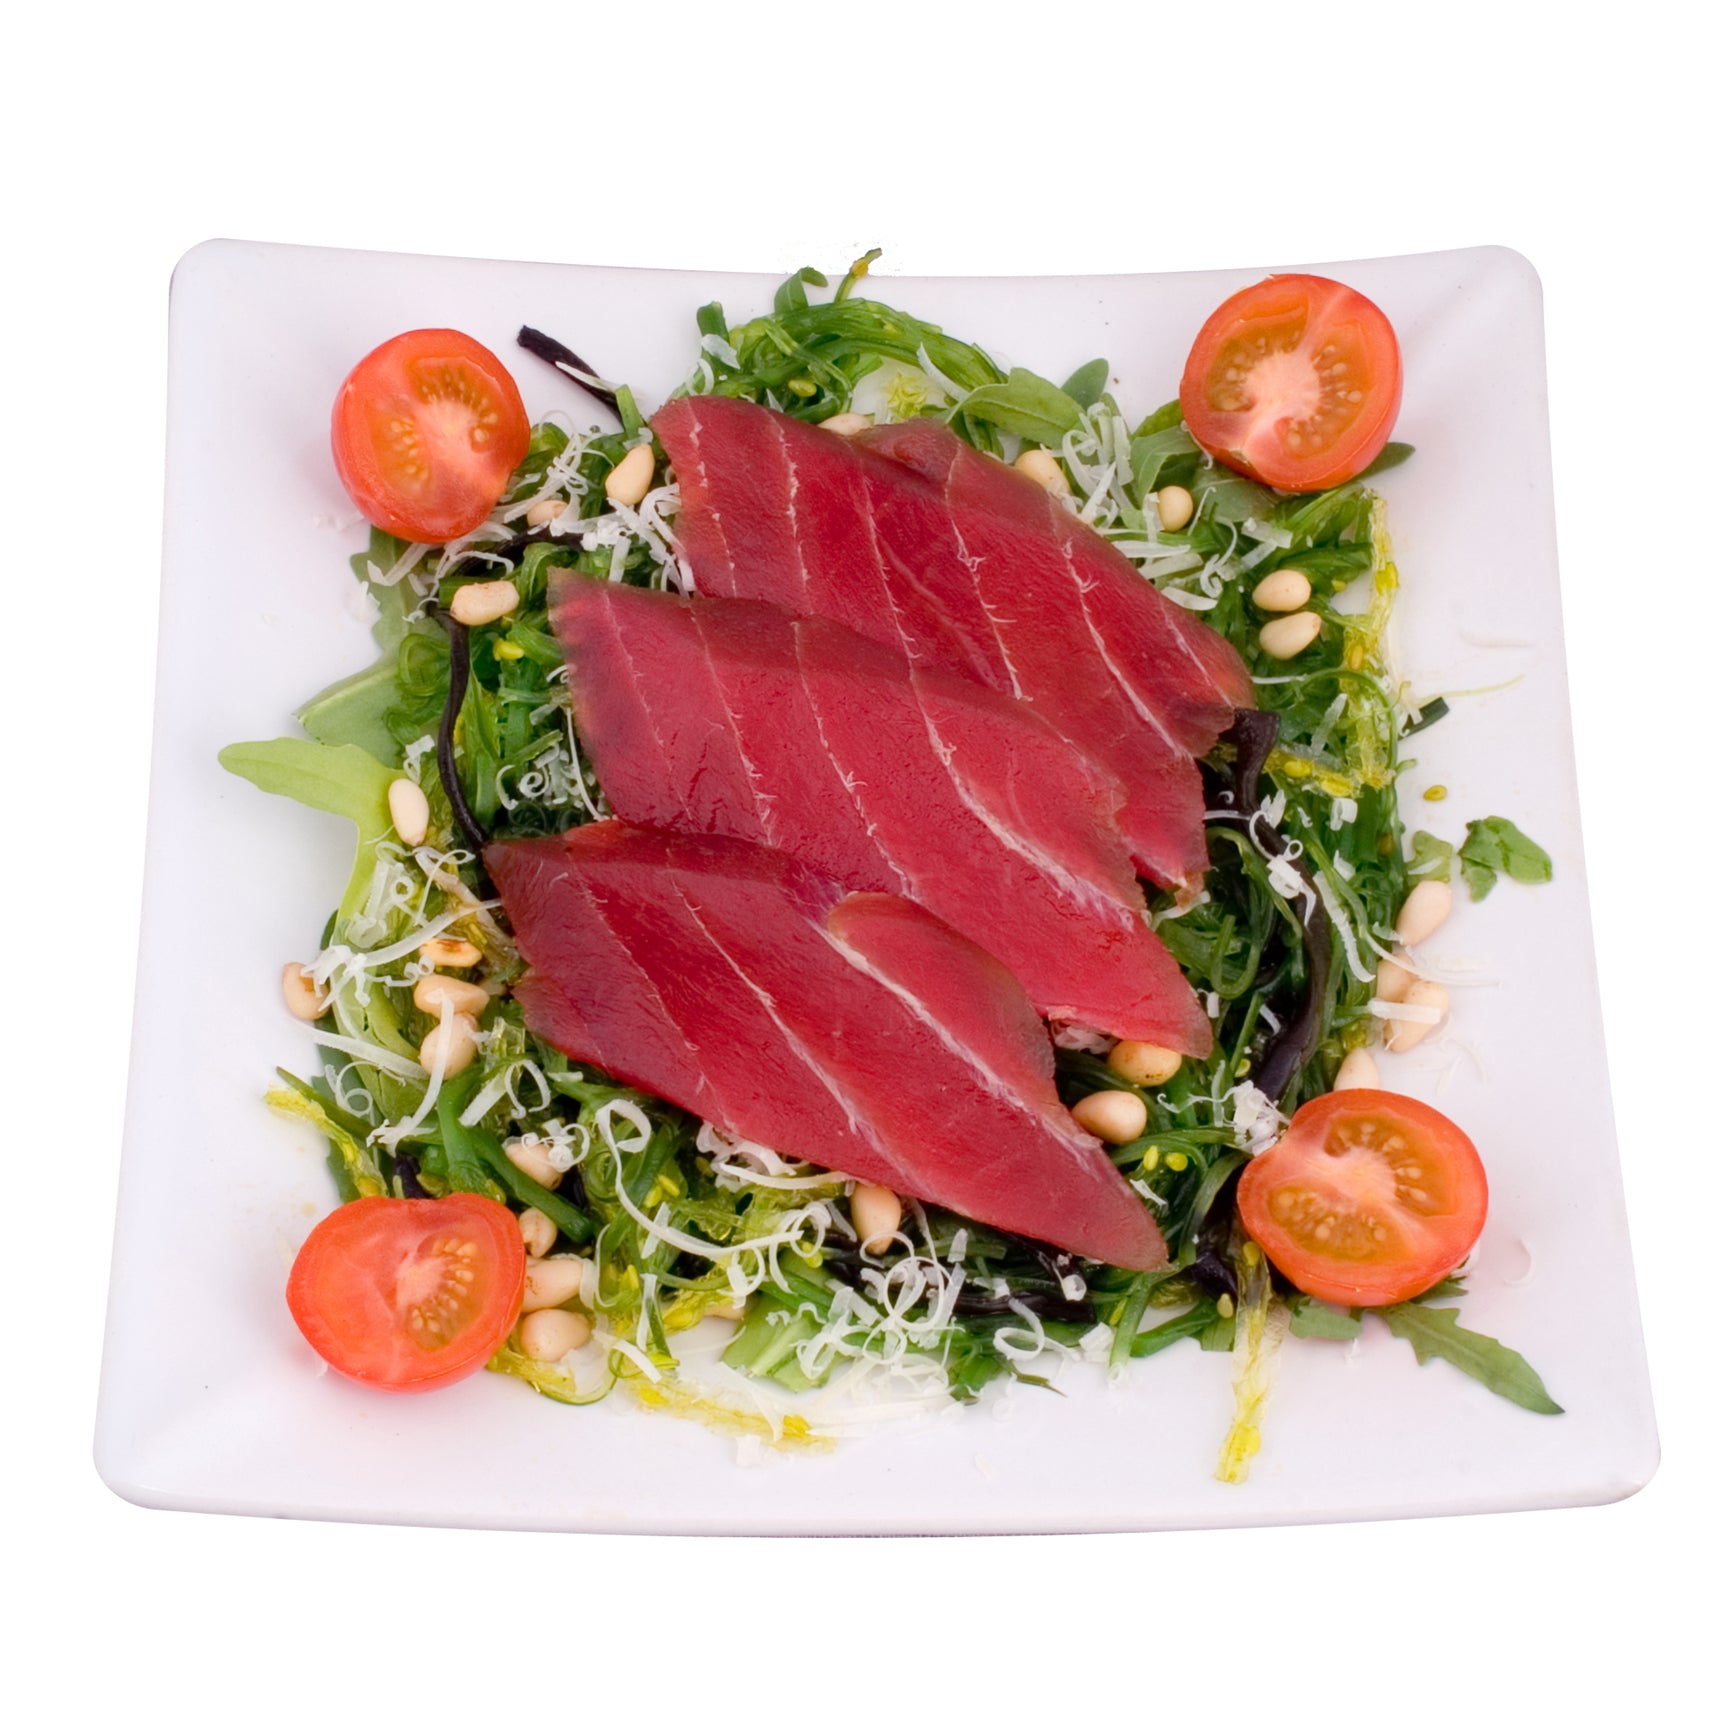 Sliced tuna sashimi on a white plate with fresh green salad